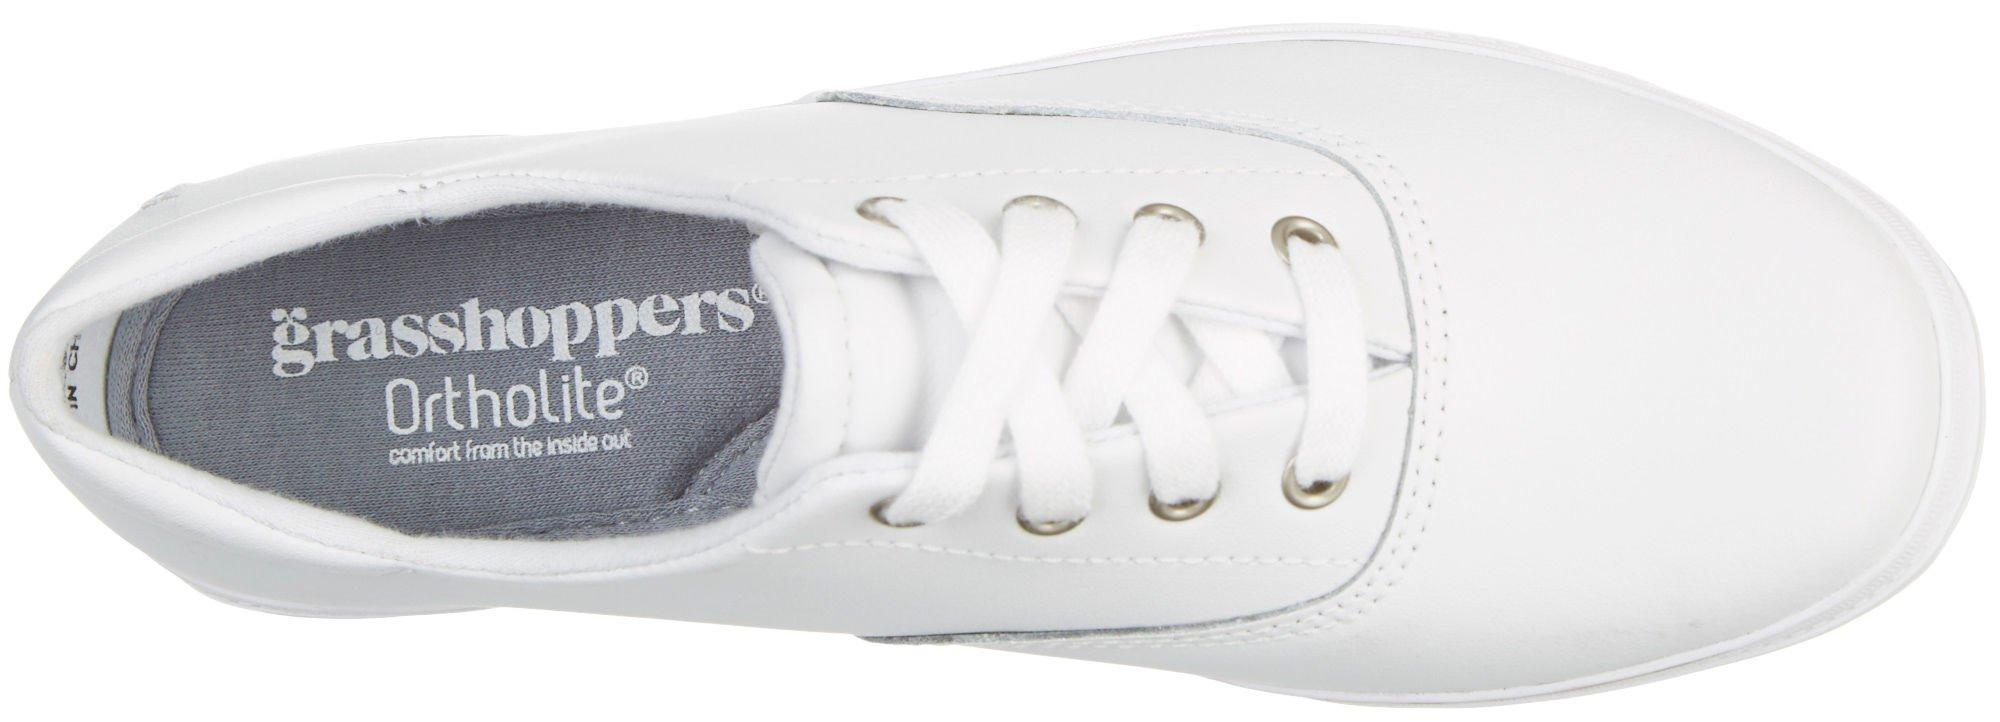 grasshopper white leather sneakers